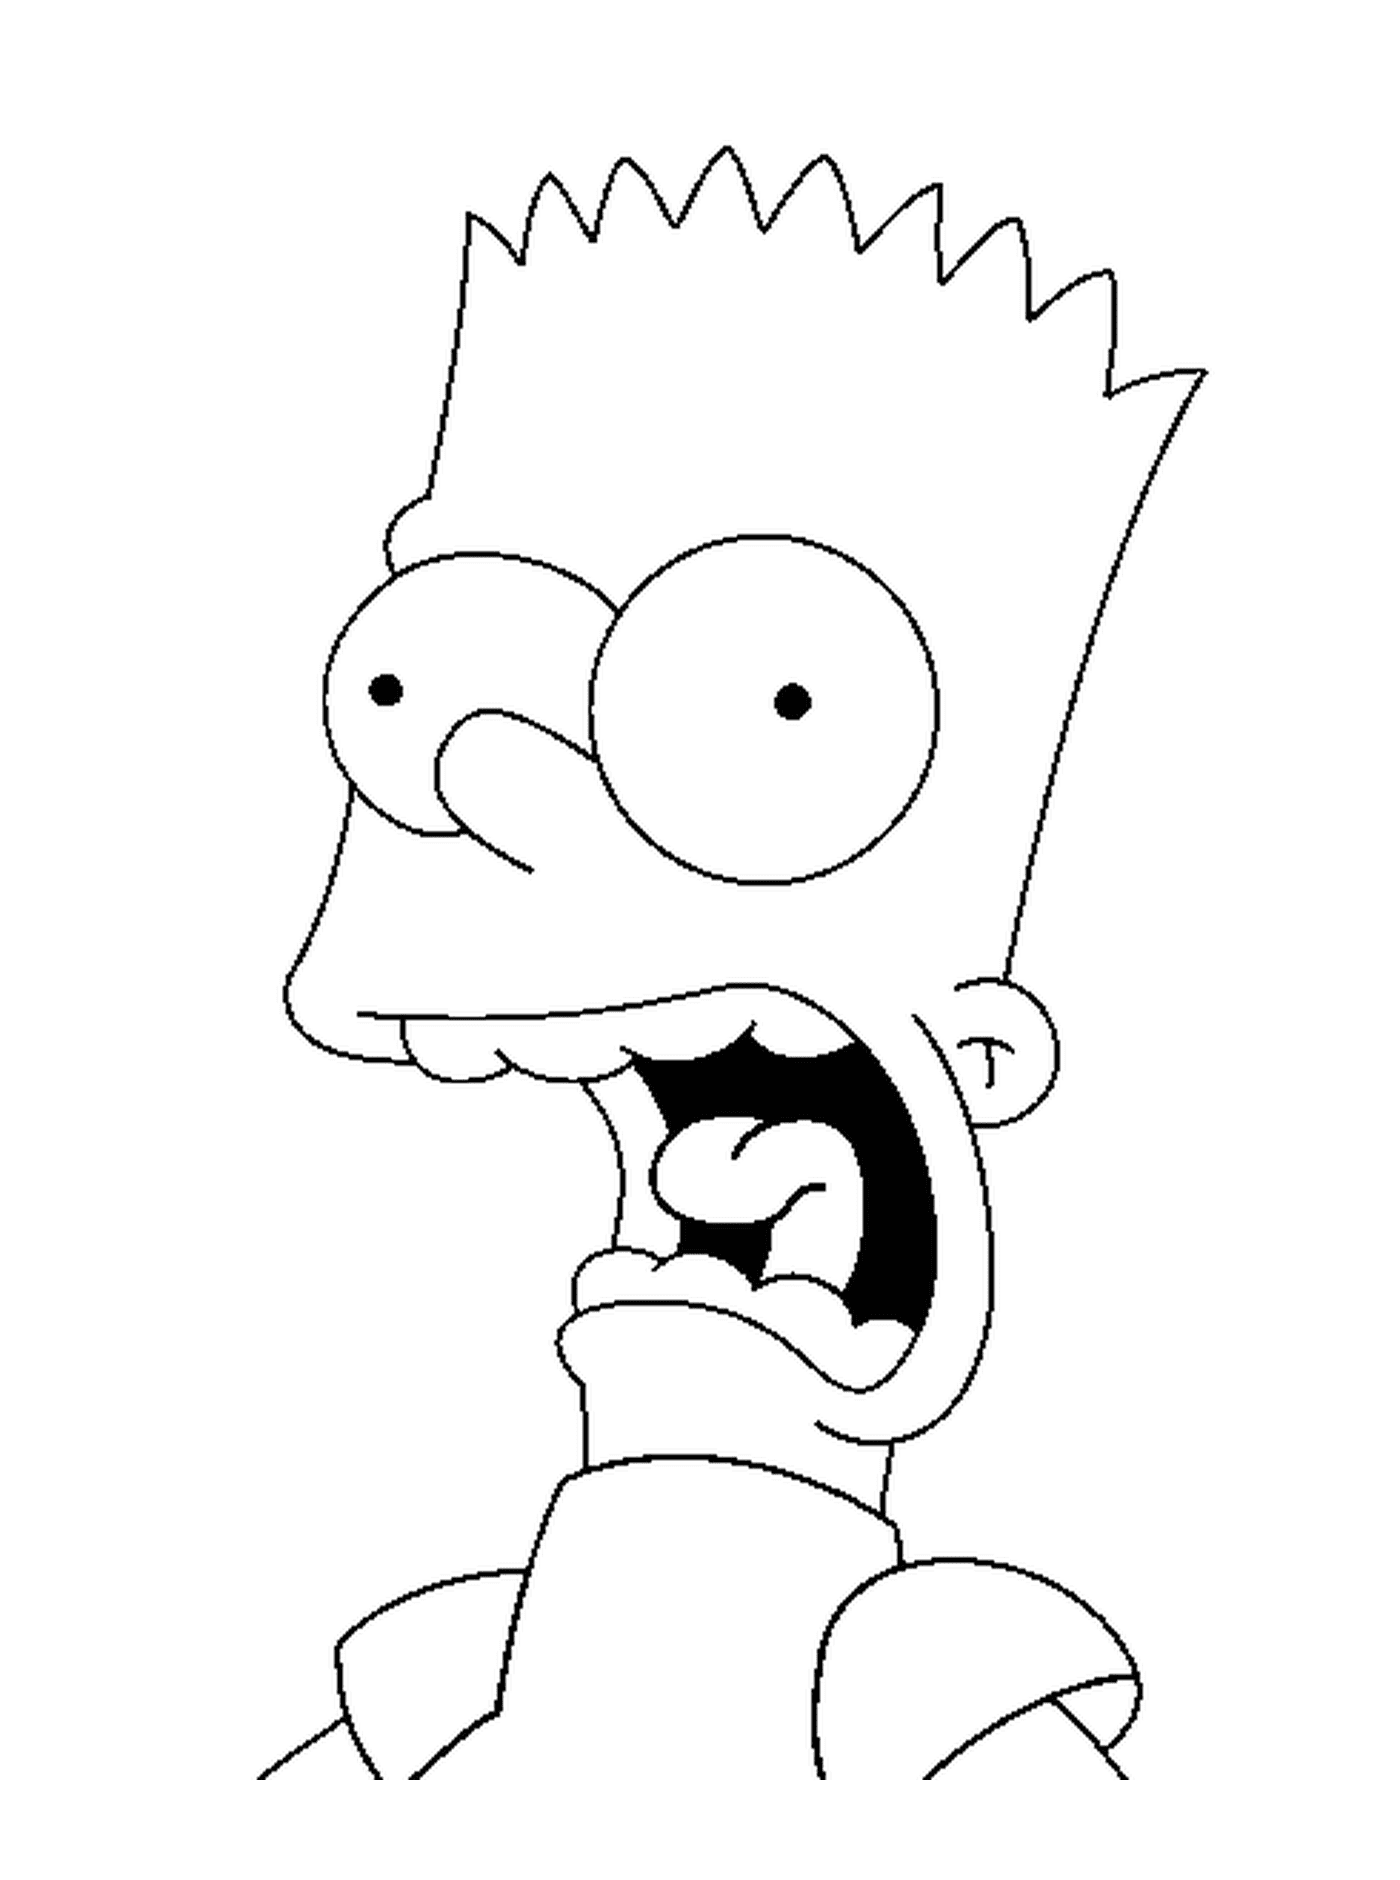  Bart screams with fear 